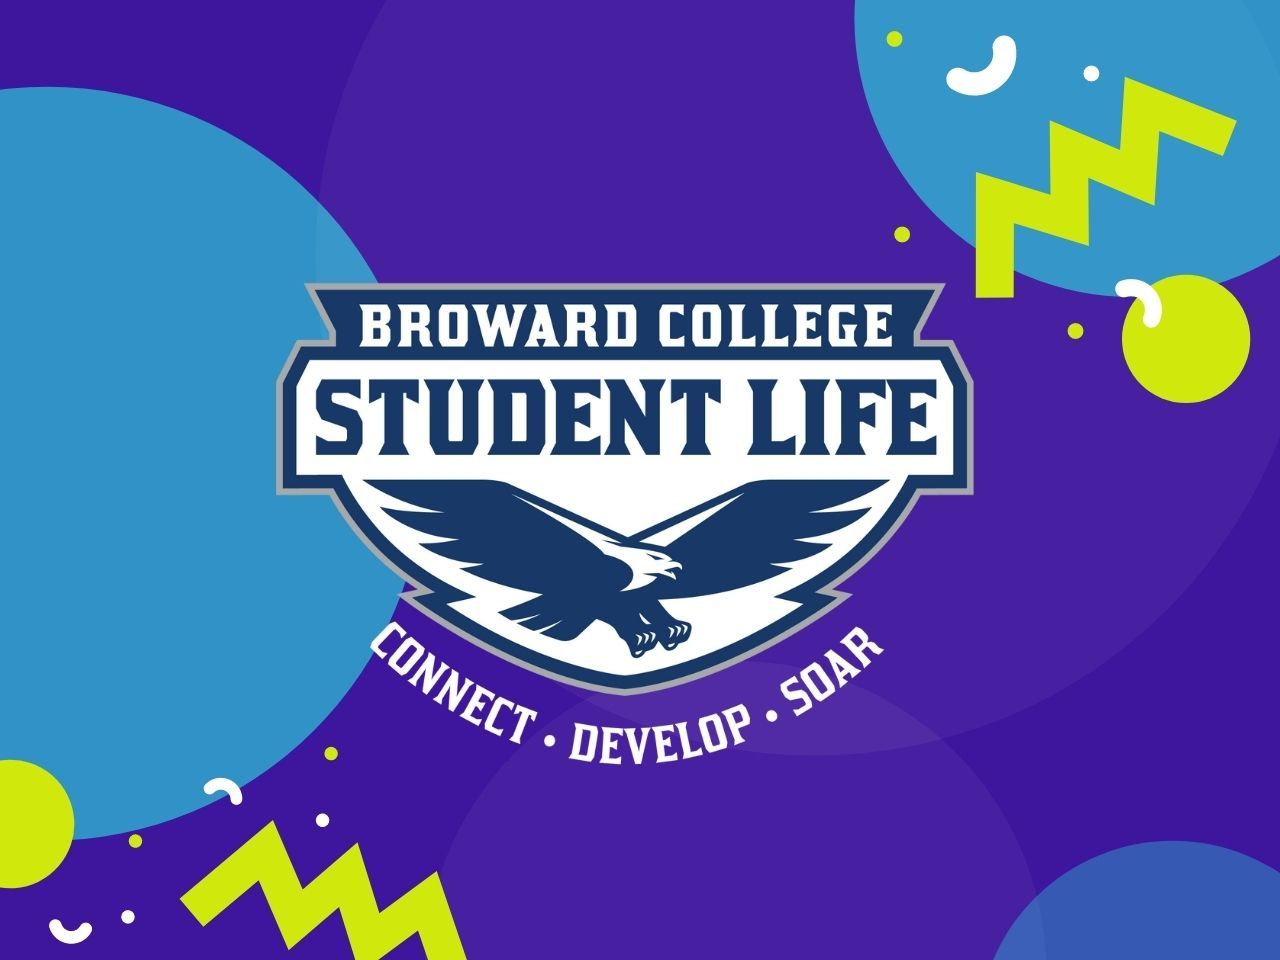 Student Life Logo